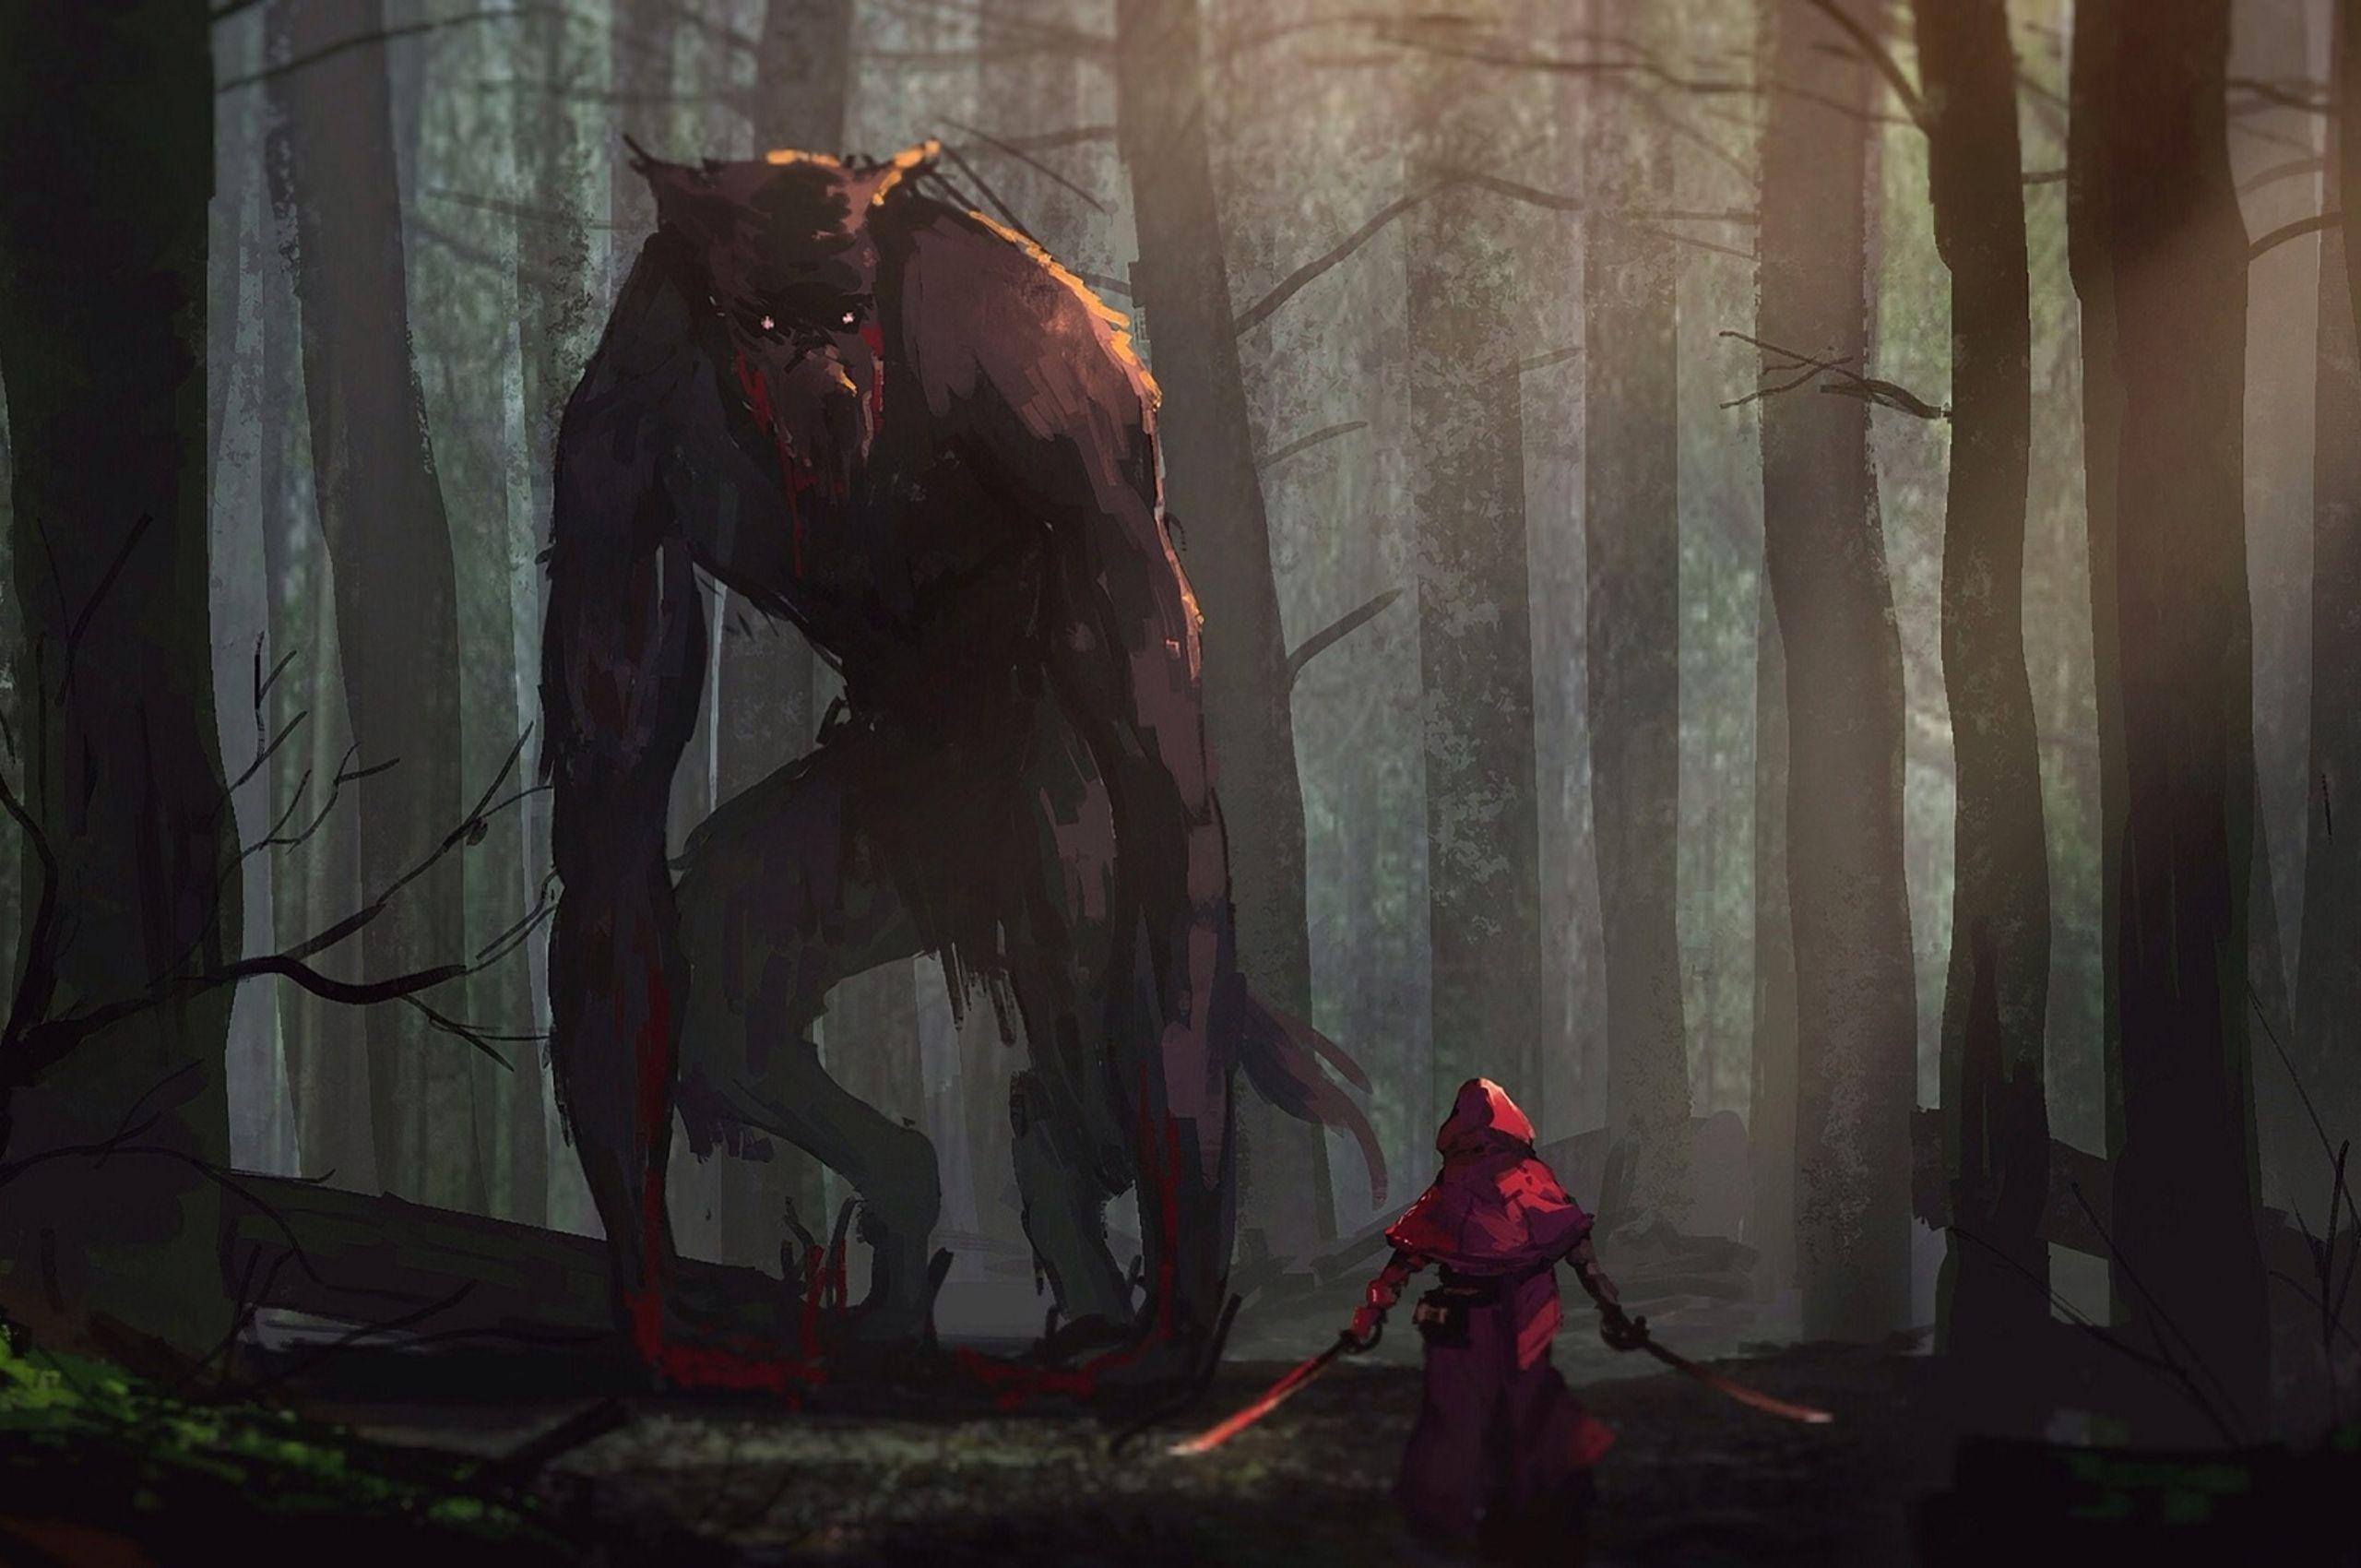 Little Red Riding Hood Vs Werewolves Fairy Tale Artwork